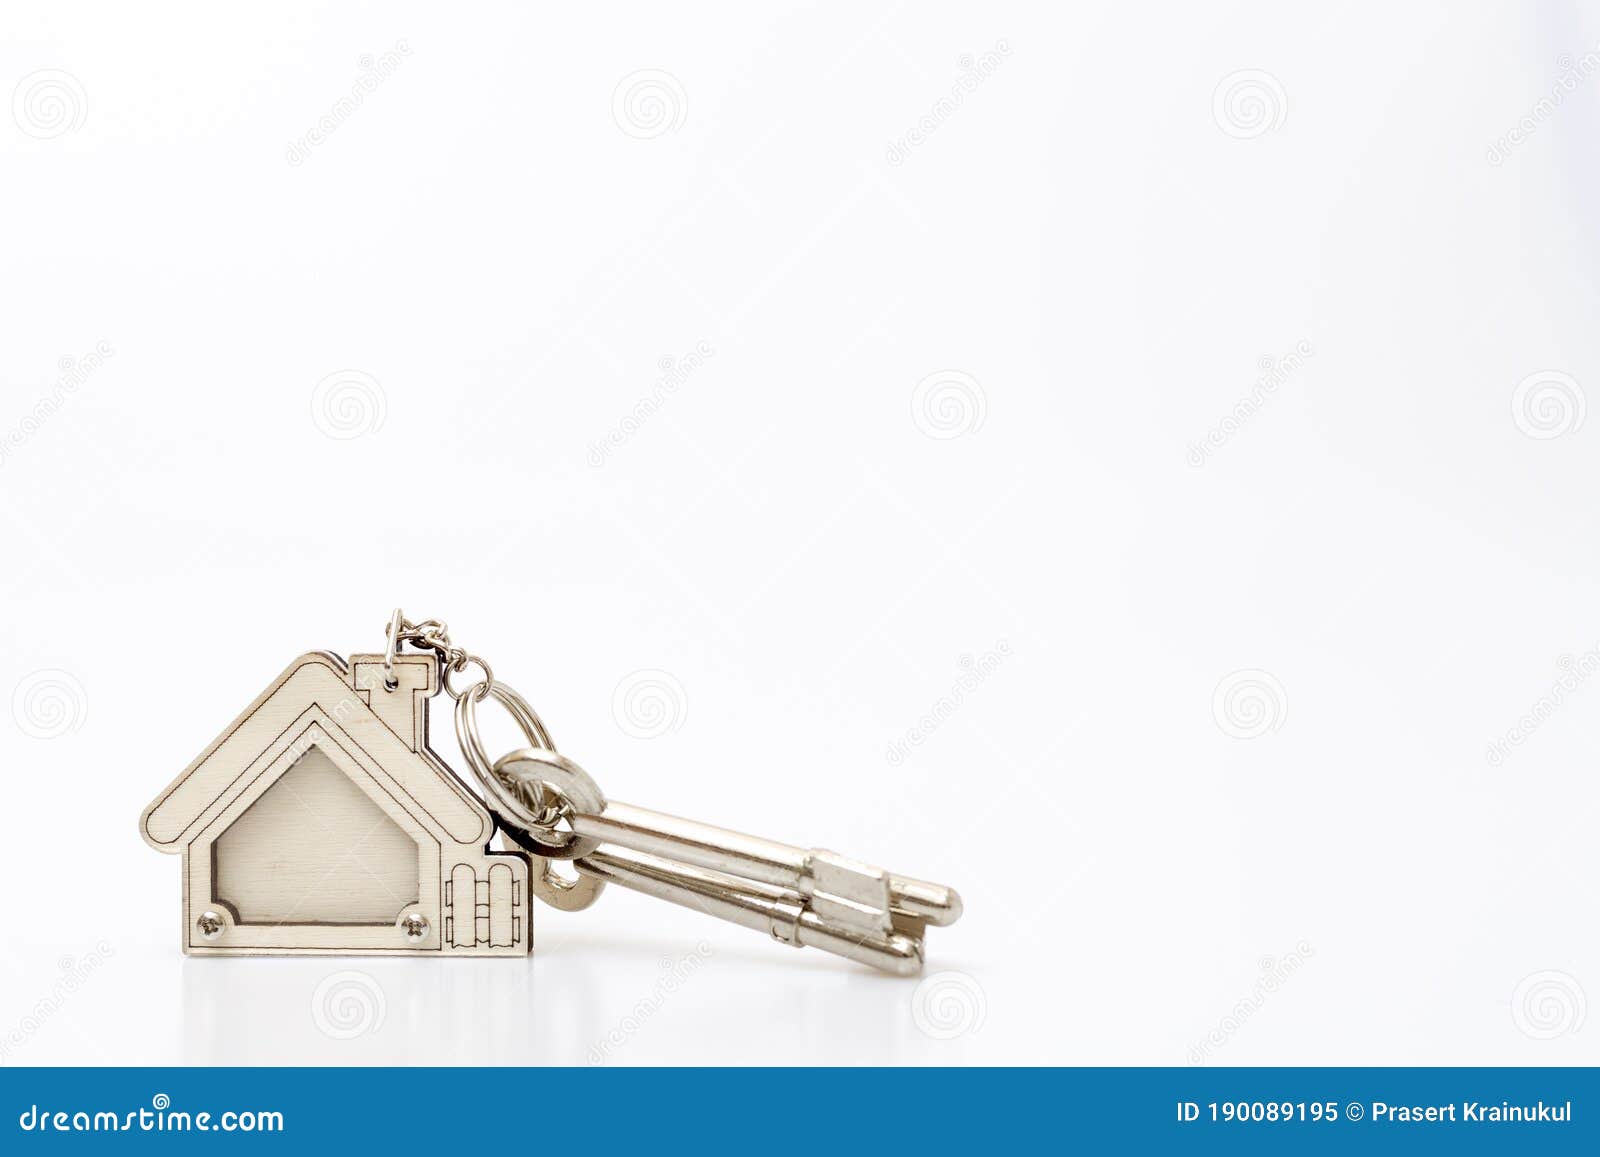 home key on tabel. concept for real estate busines